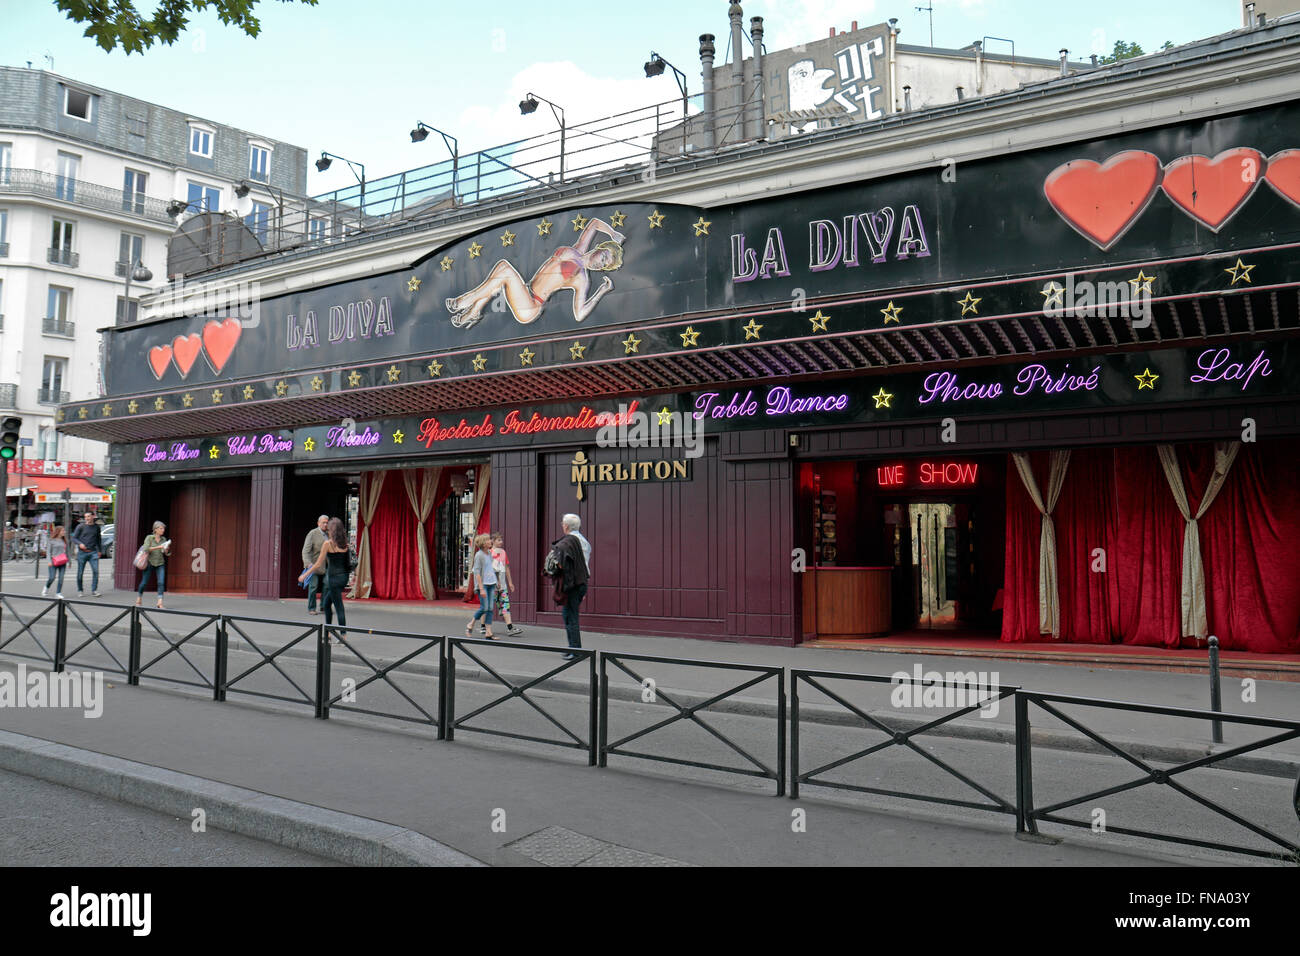 The La Diva live dancing club (or strip club) in Paris, France. Stock Photo